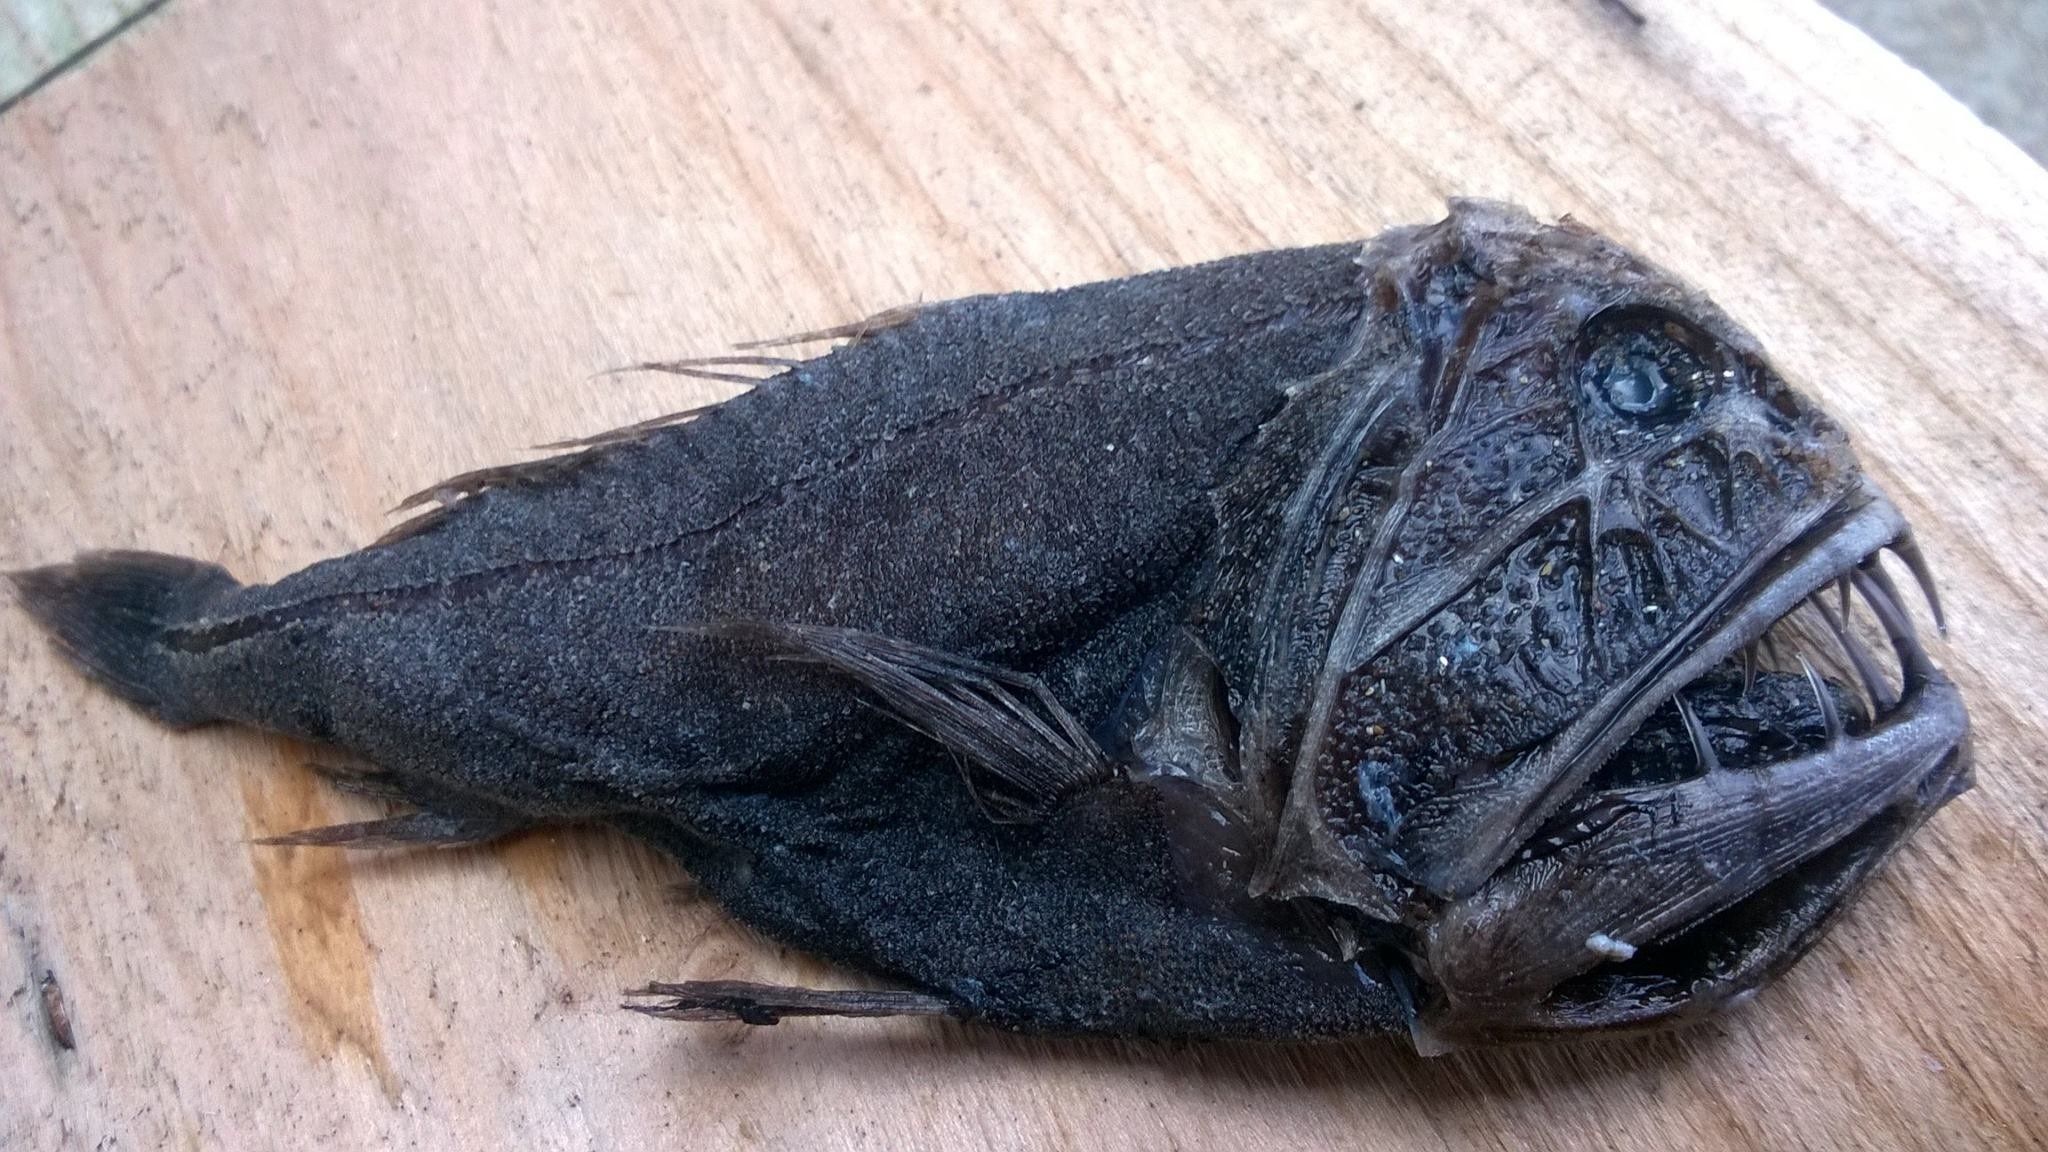 Monster surprise: Rarely-seen deep sea fish found on beach - BBC News